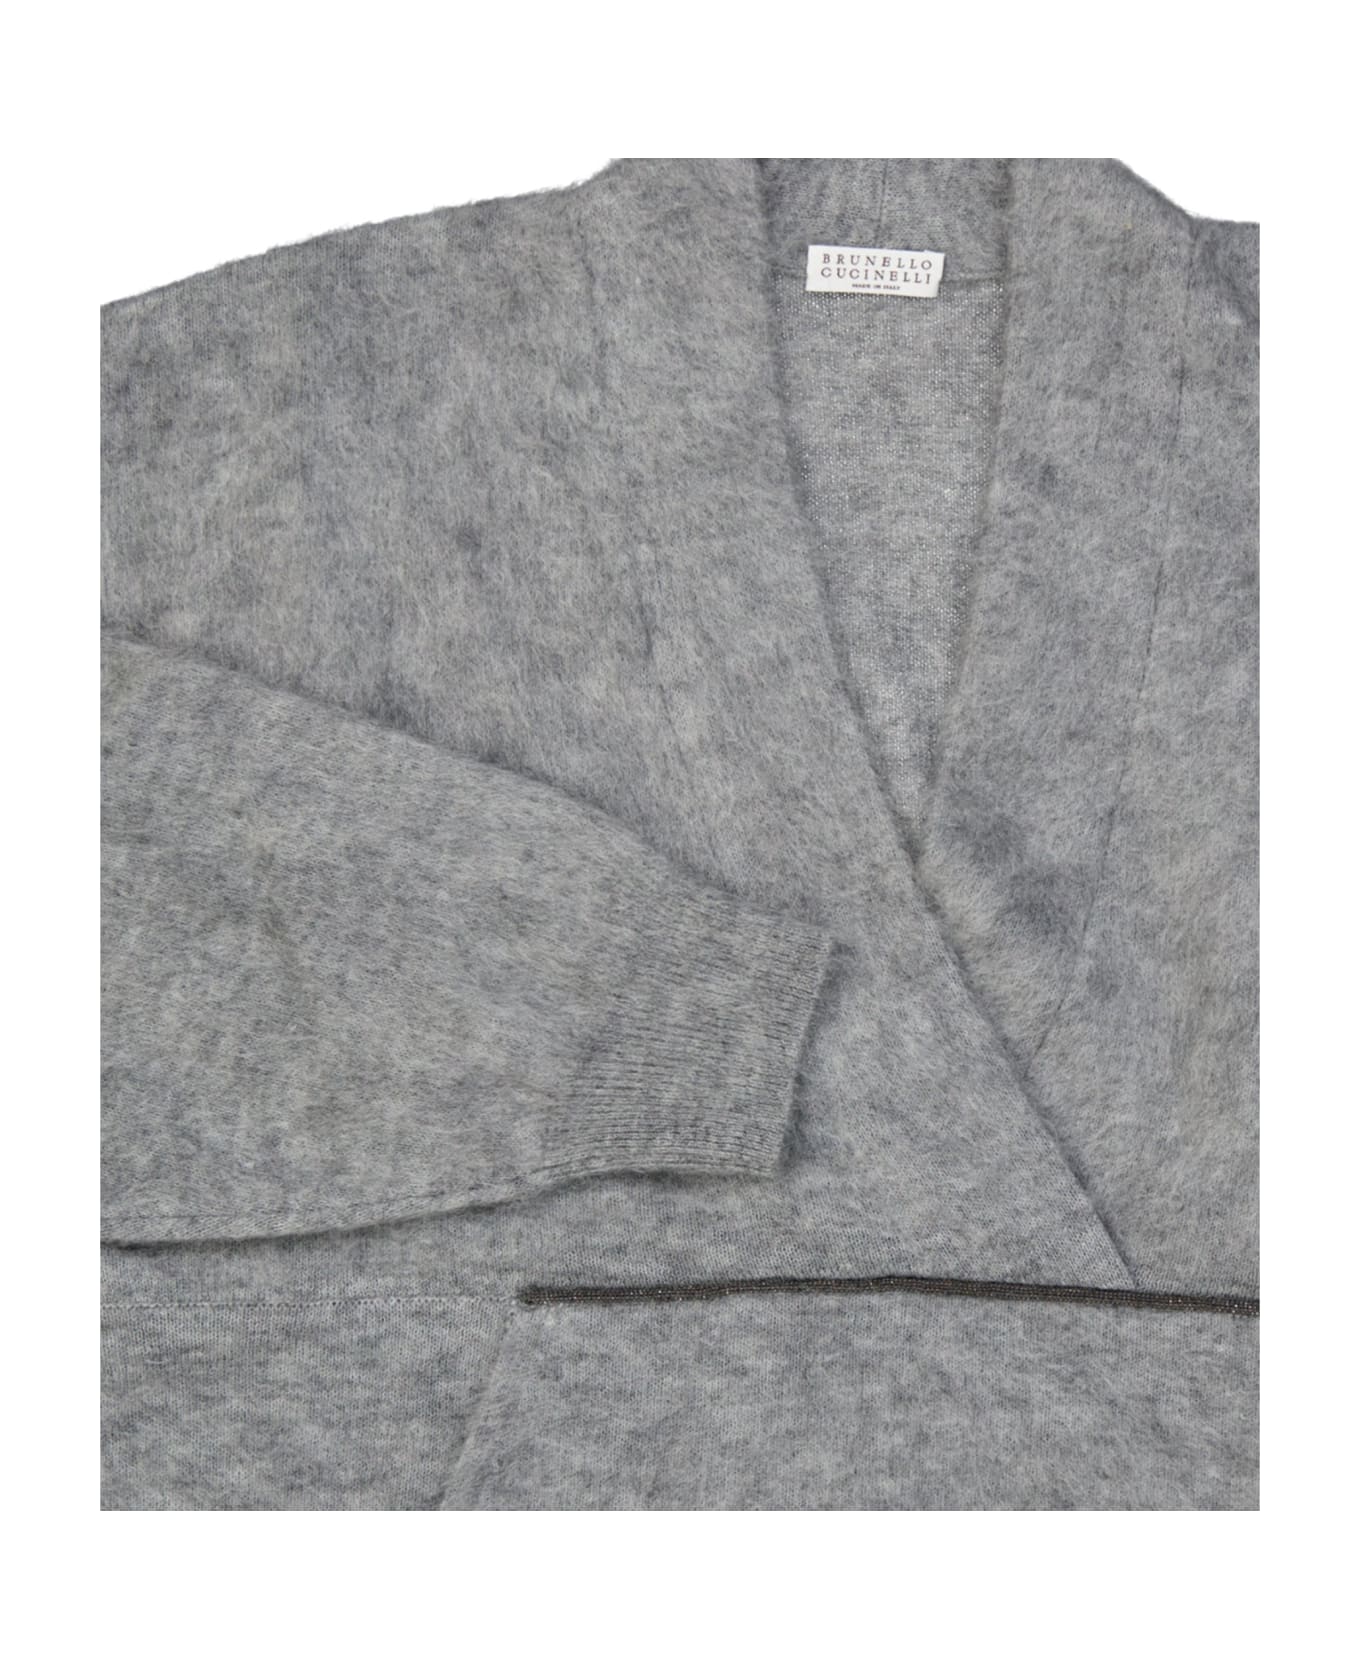 Brunello Cucinelli Women's Gray Sweater - Gray